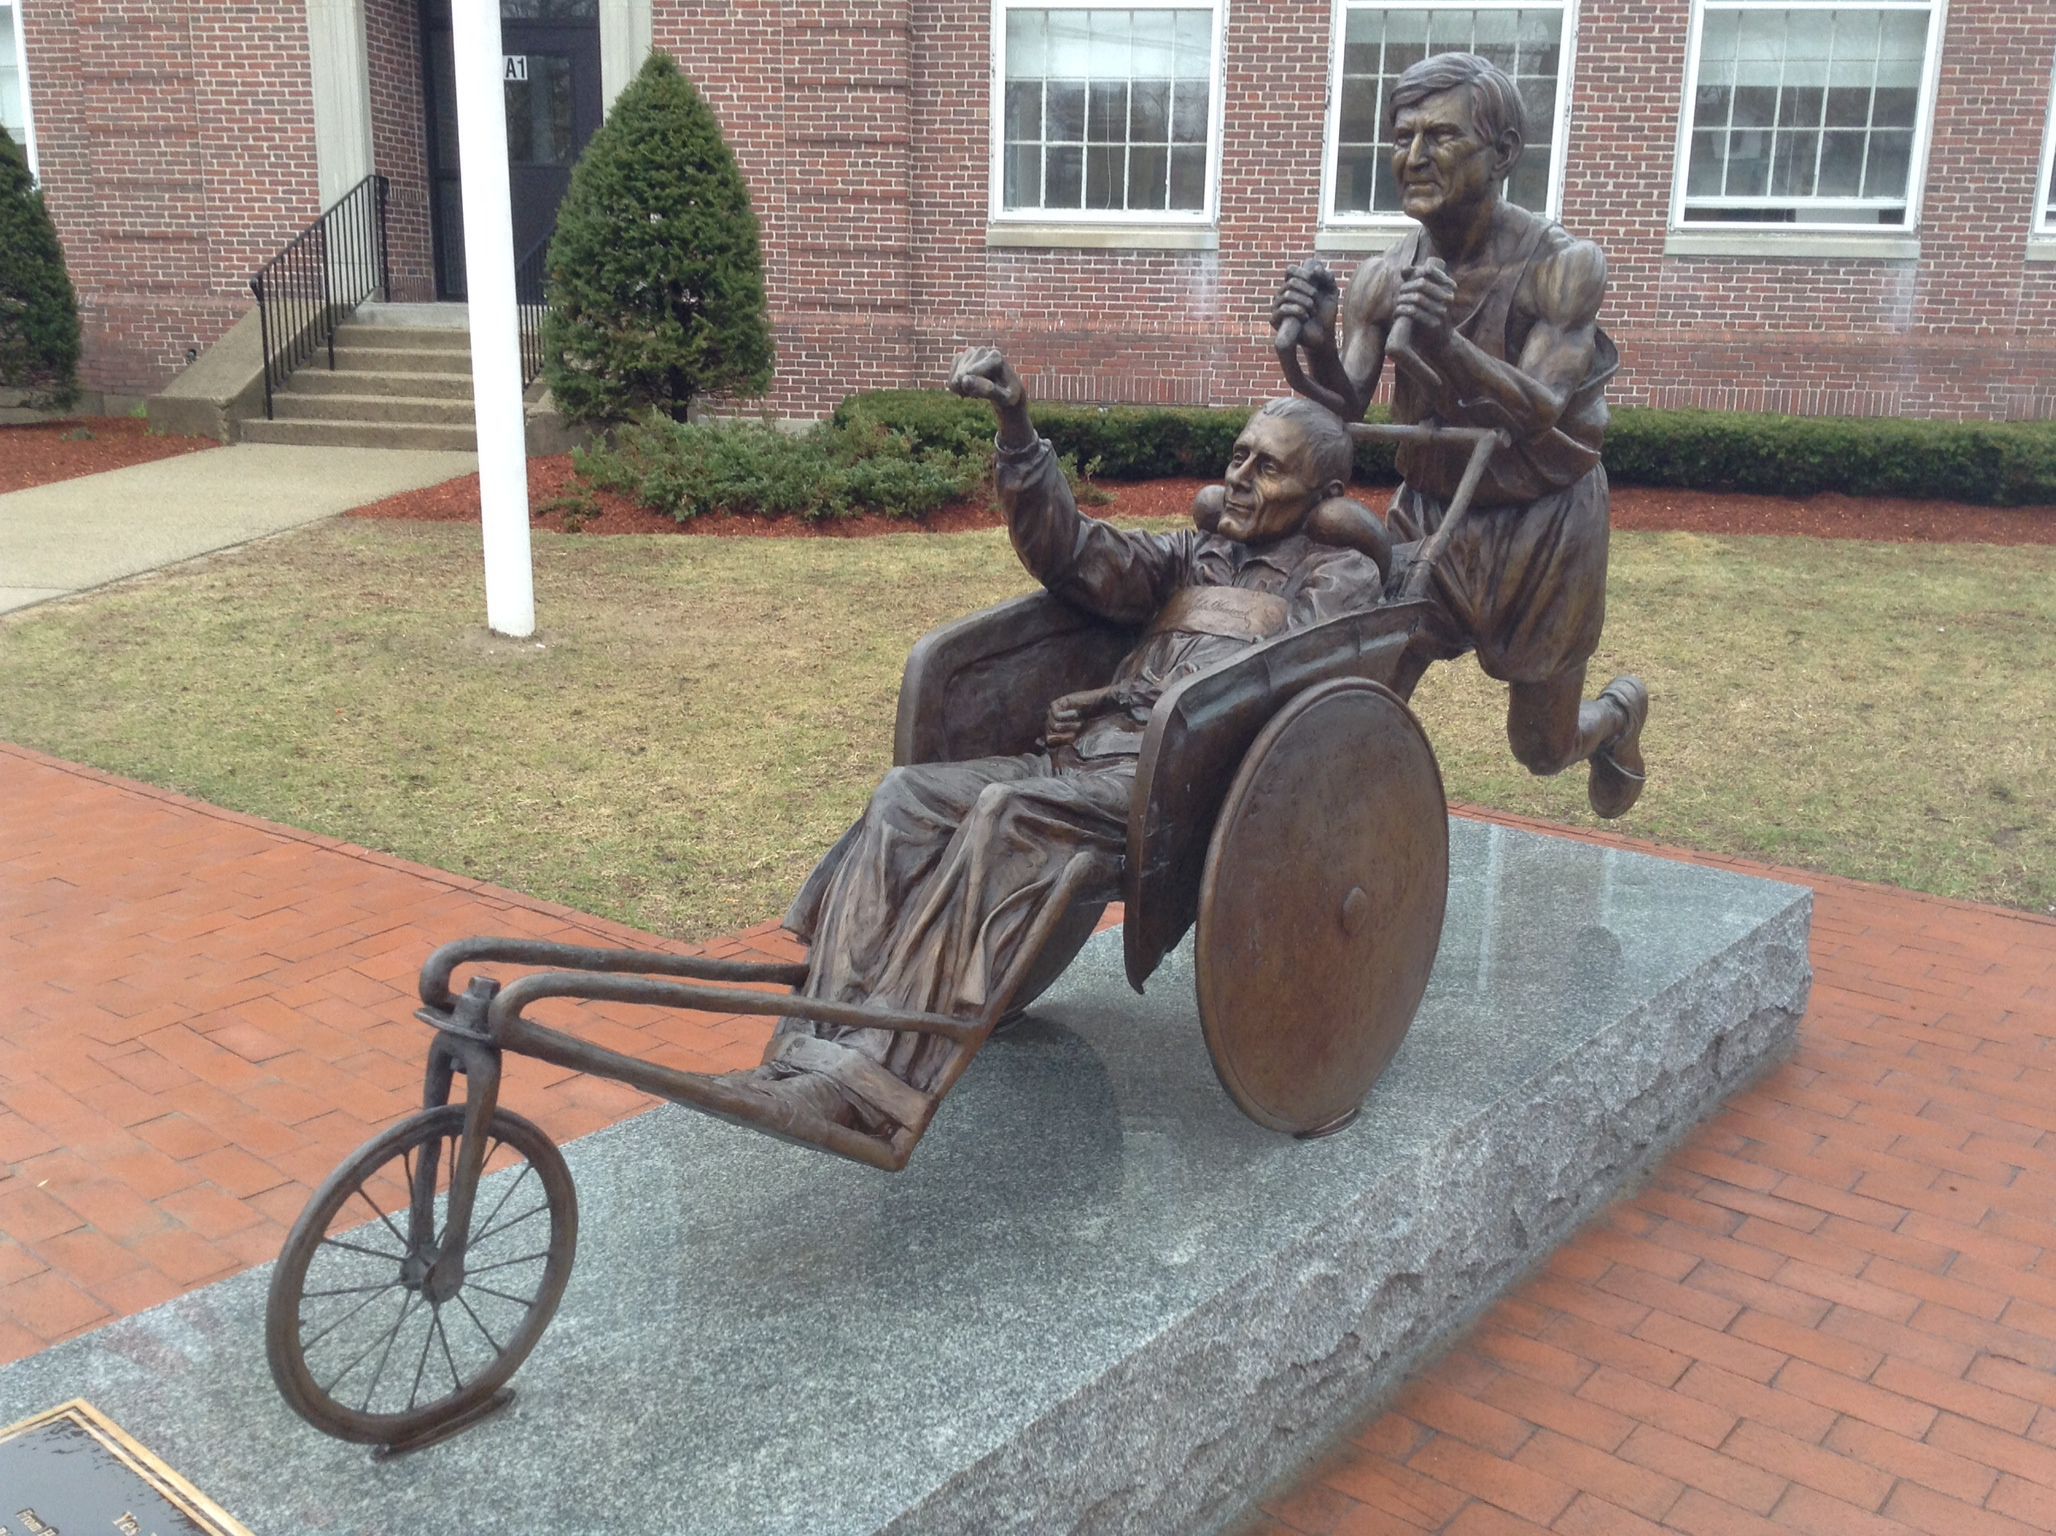 A statue of a man pushing a boy in a wheelchair.